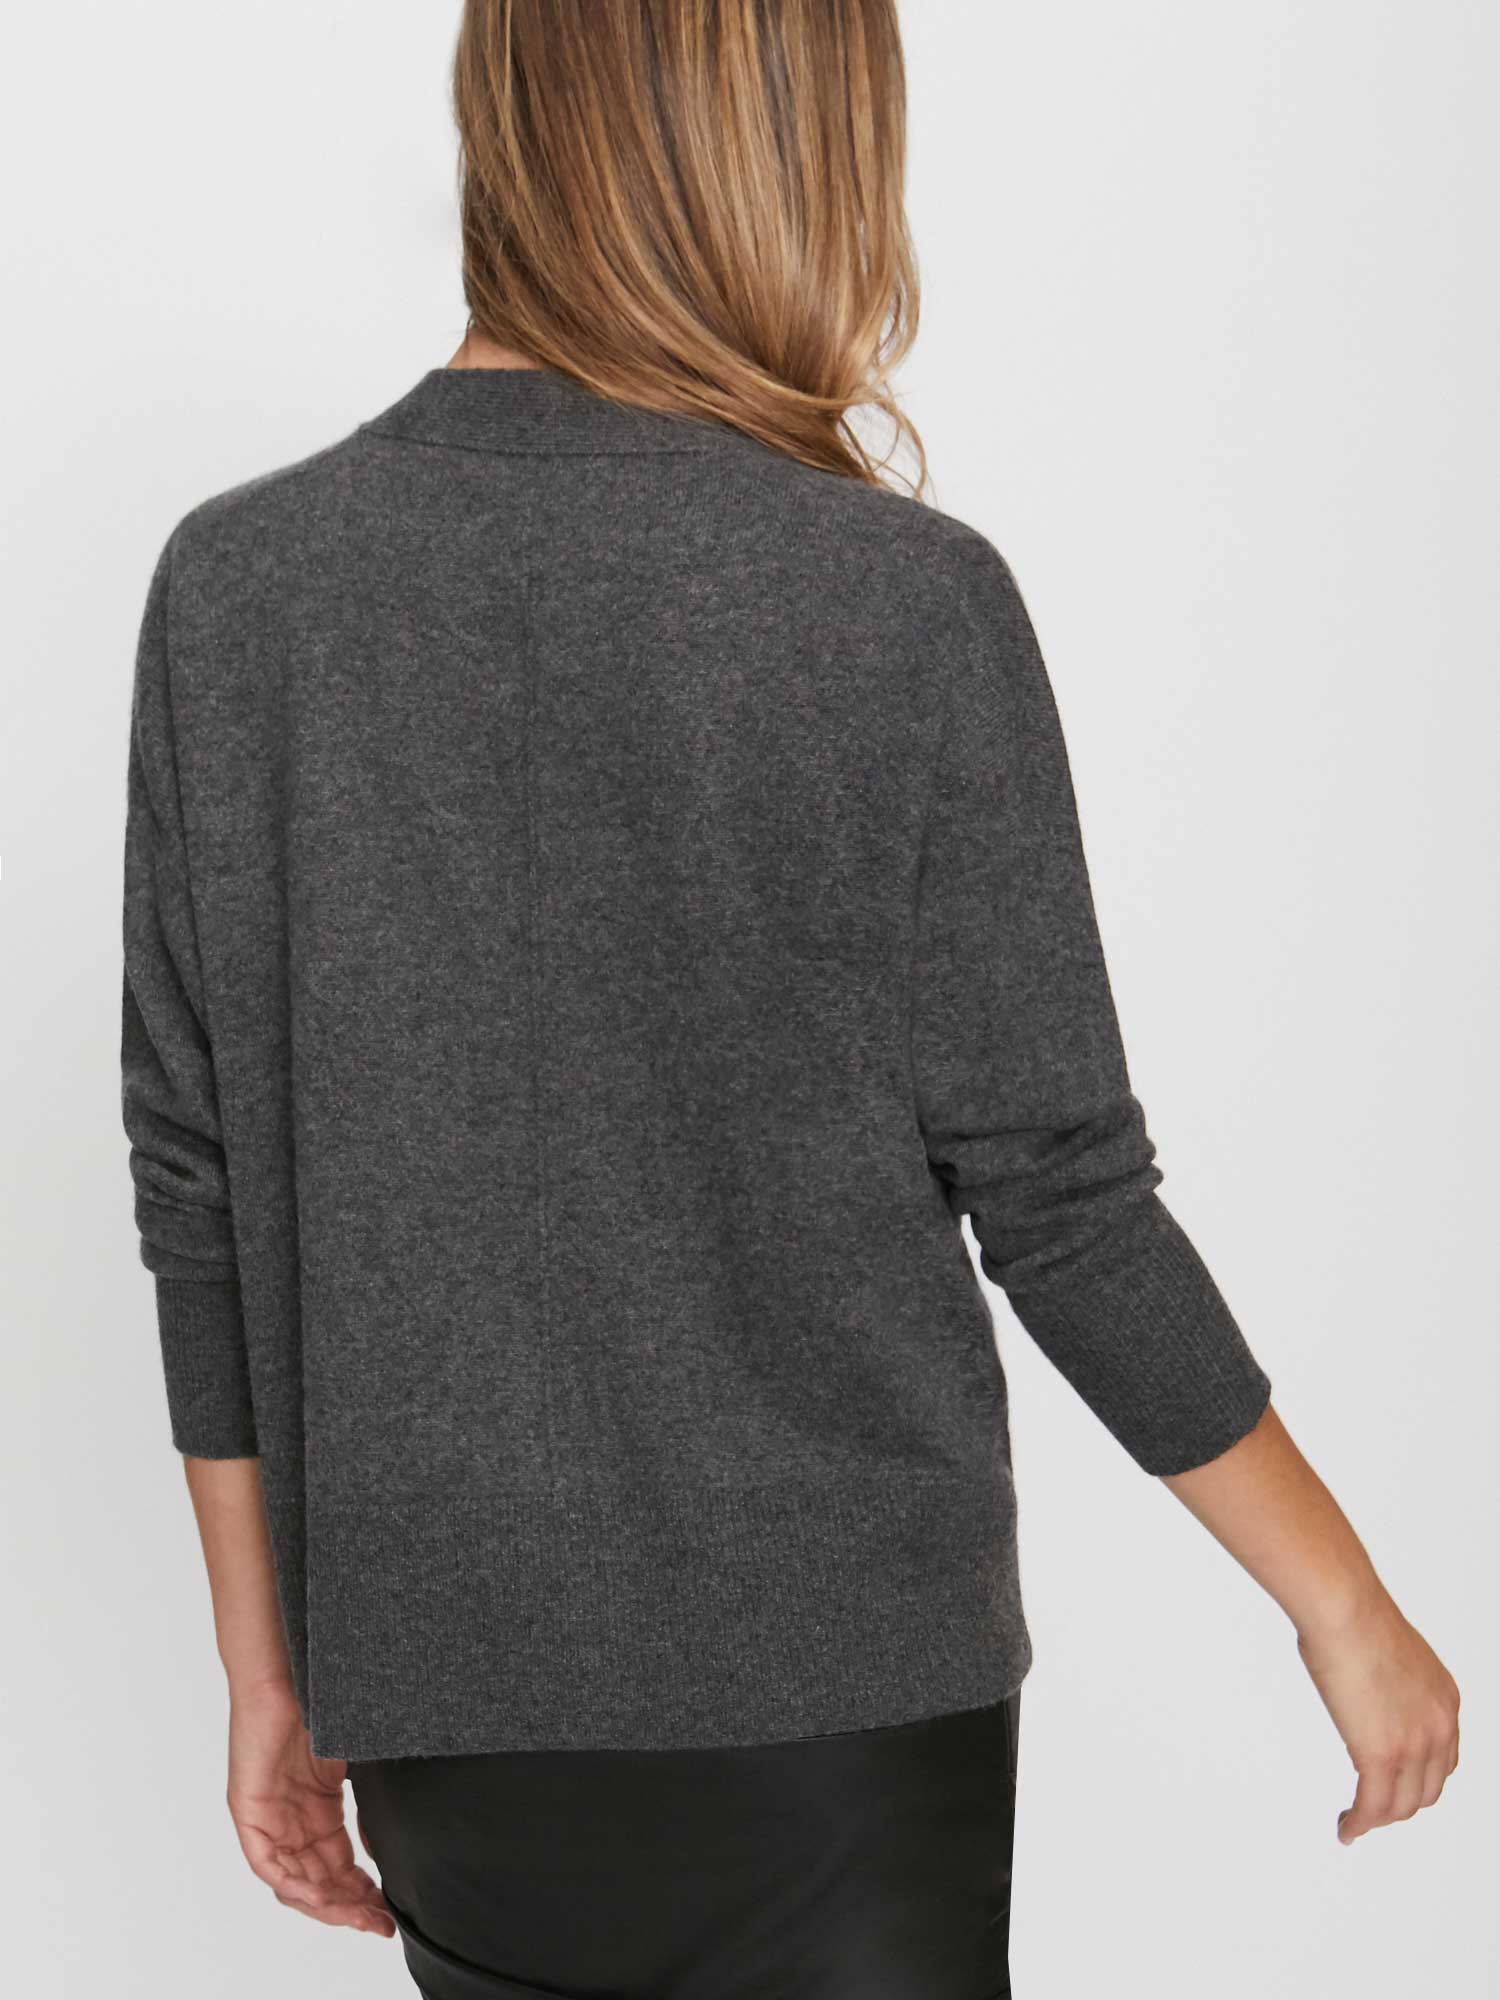 Lace dark grey layered cardigan sweater back view